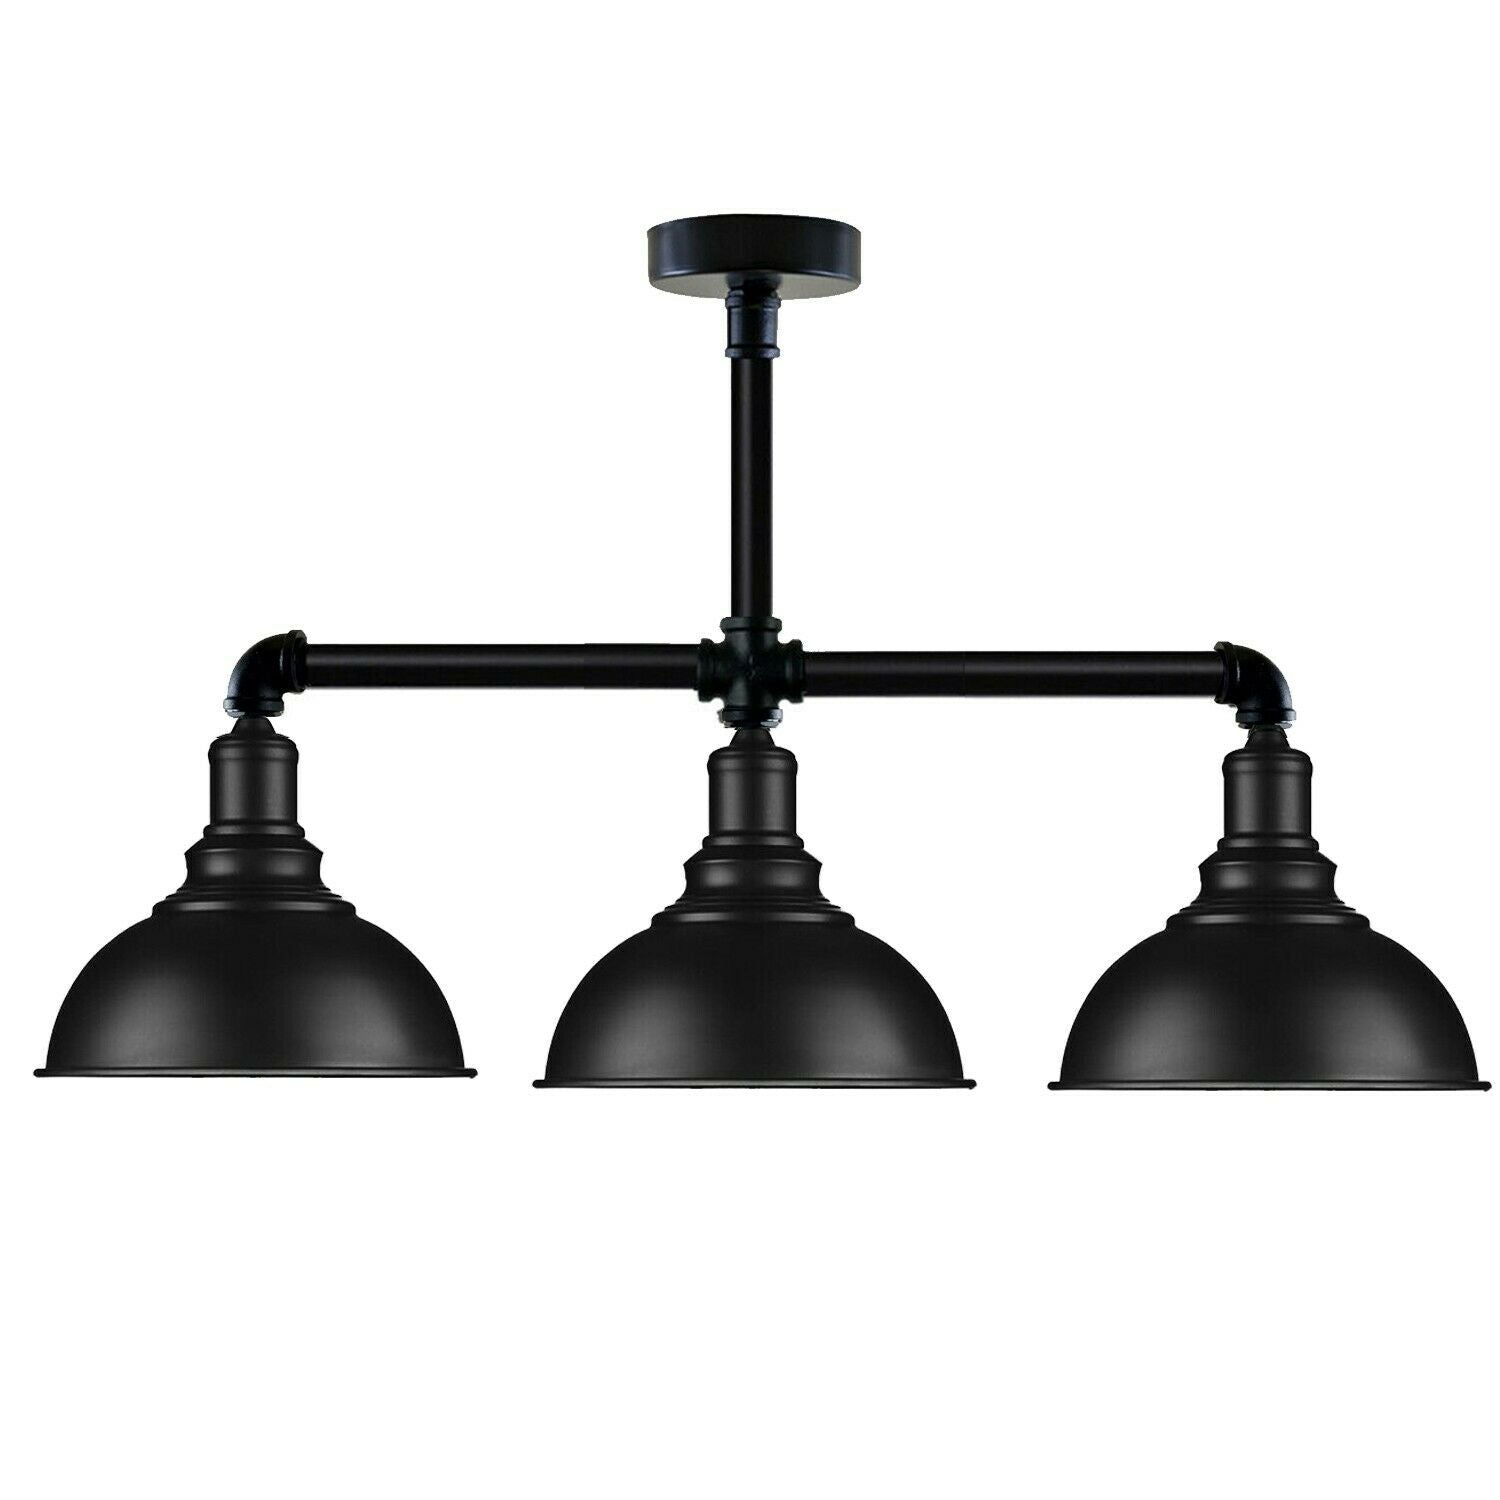 Industrial Vintage Retro Ceiling Pipe Light Black Dome Shade E27 UK Flush Lights~3732 - LEDSone UK Ltd